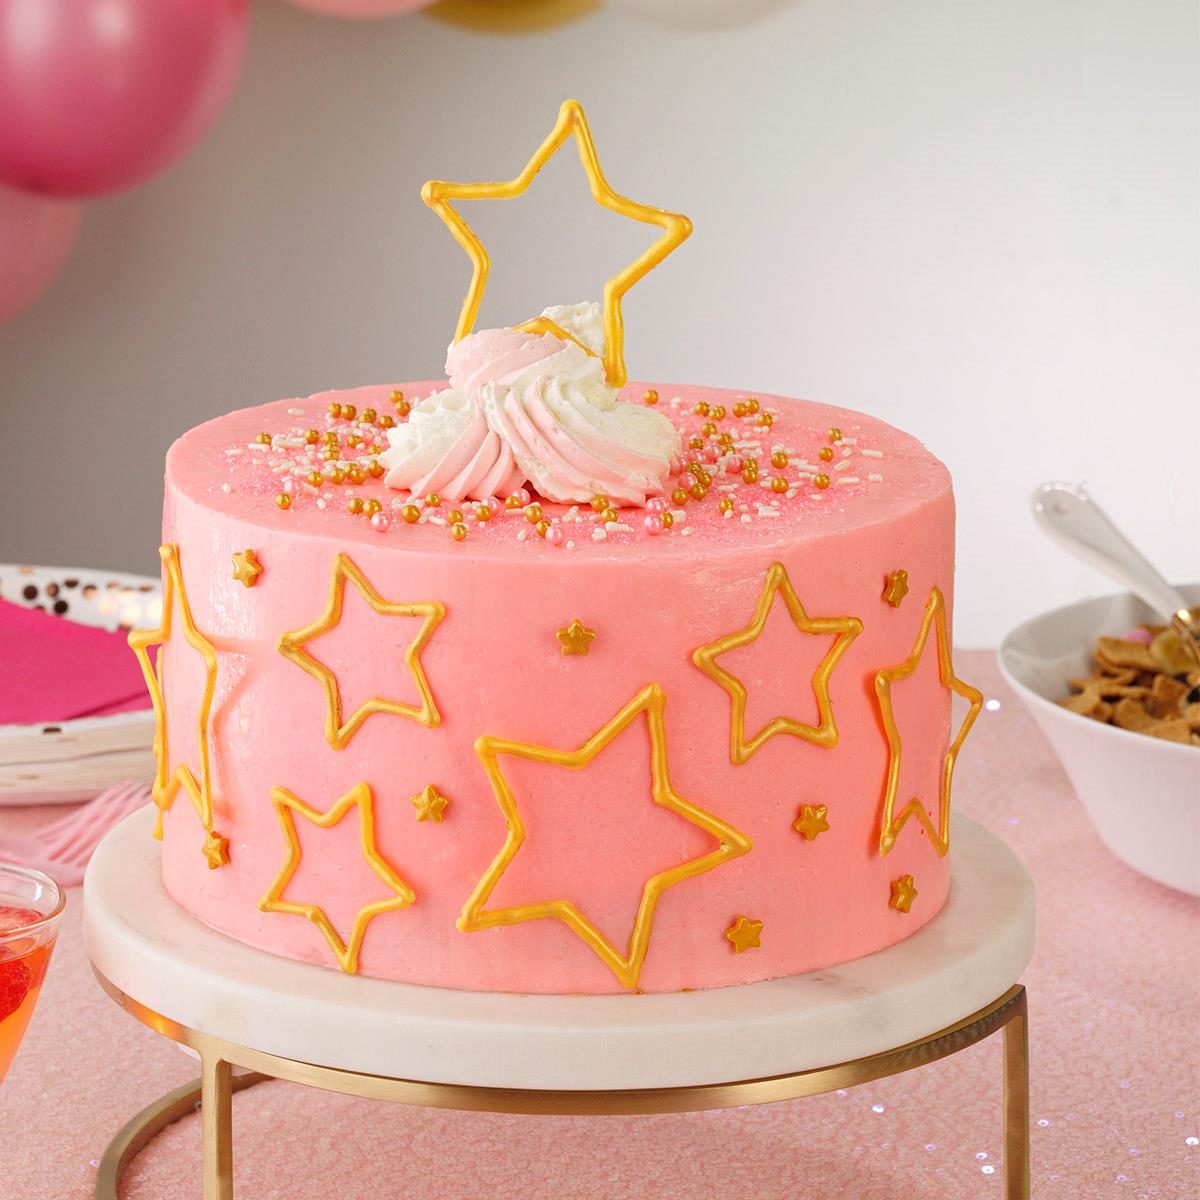 Mini Gender Reveal Cakes - Adorable Dessert Idea